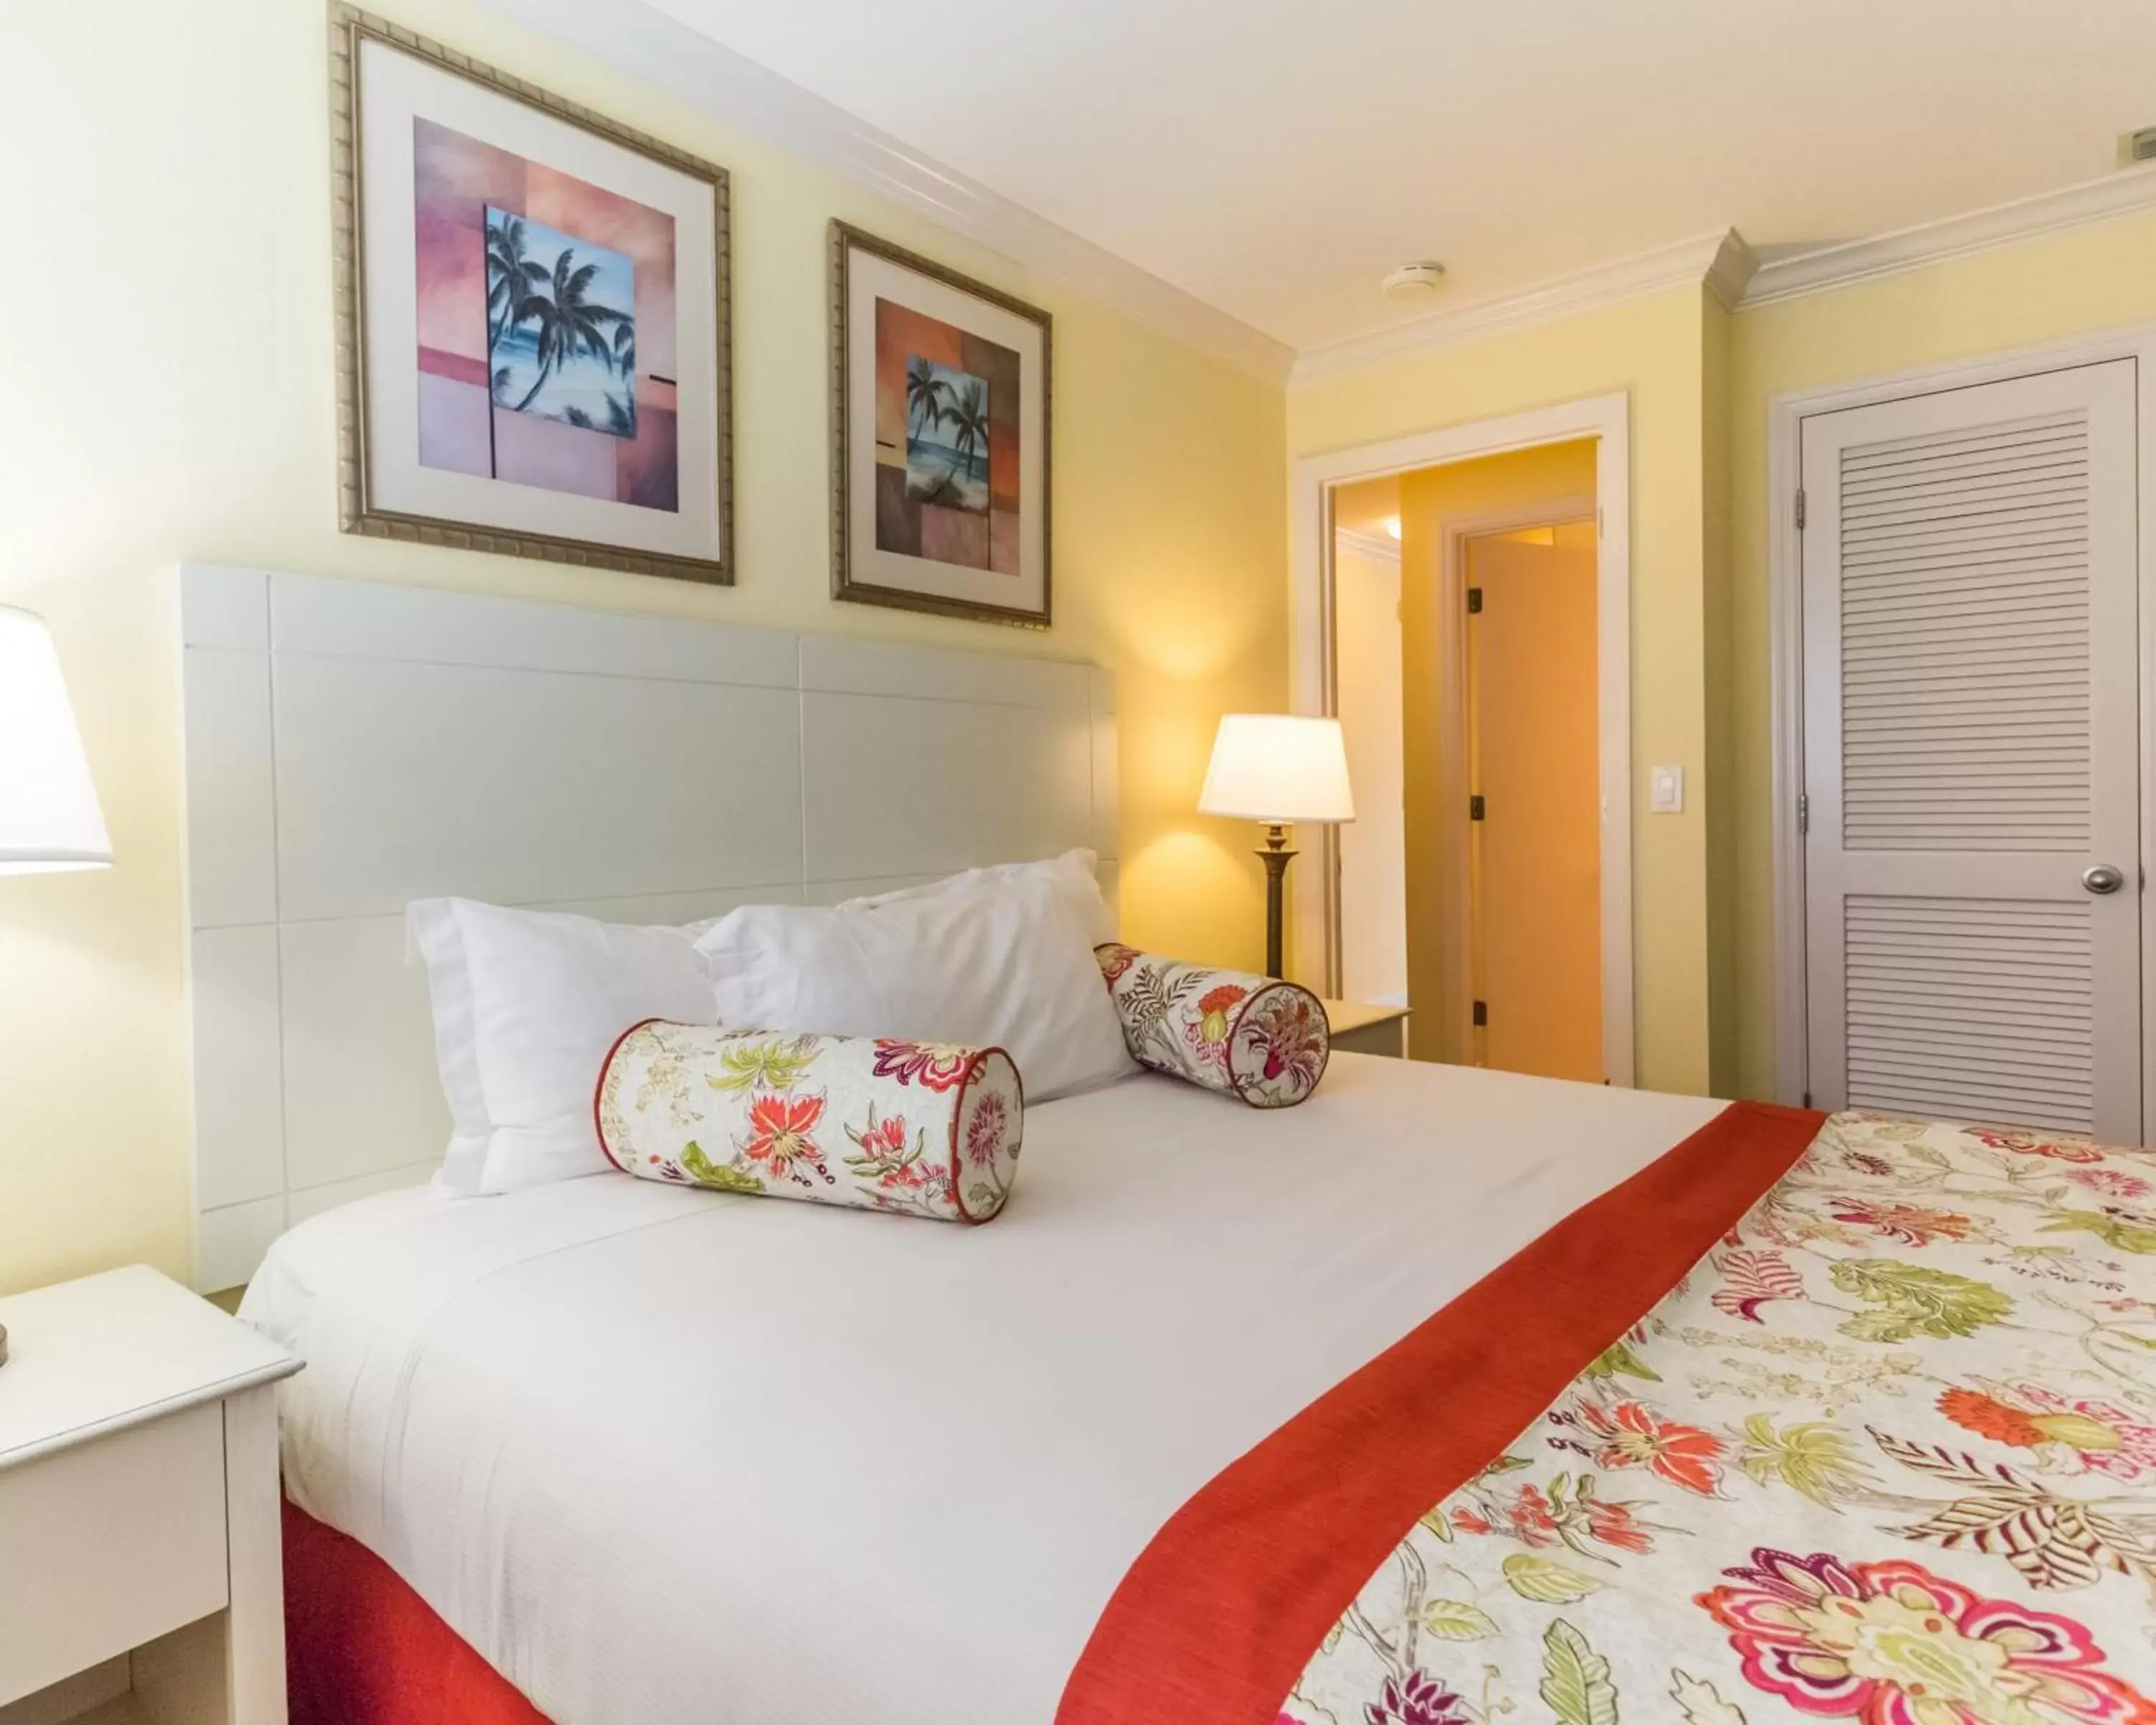 Bed, Room Photo in Inn at the Beach-Venice Florida